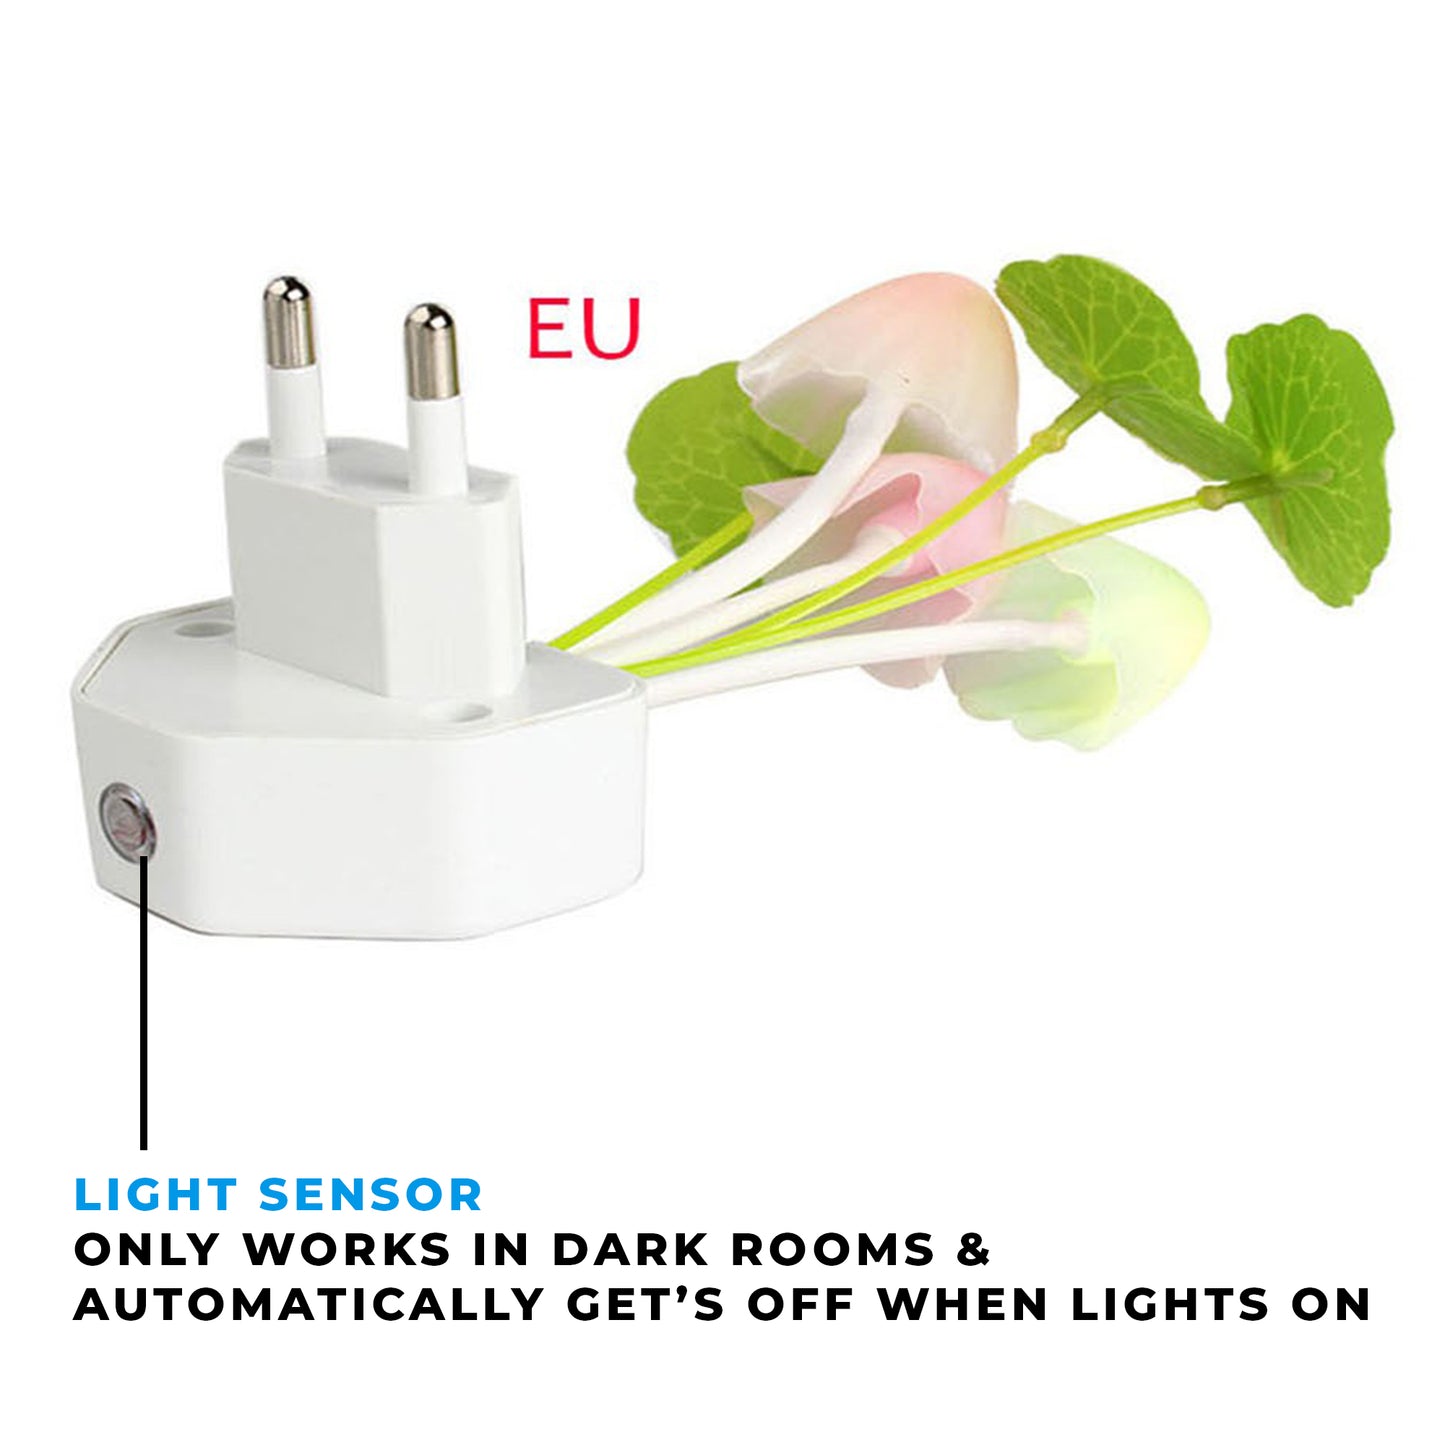 WRADER 7 Colors Changing Sensor LED Mushroom Light Flower Light for Bedroom Home Décor Hall Night Lamp